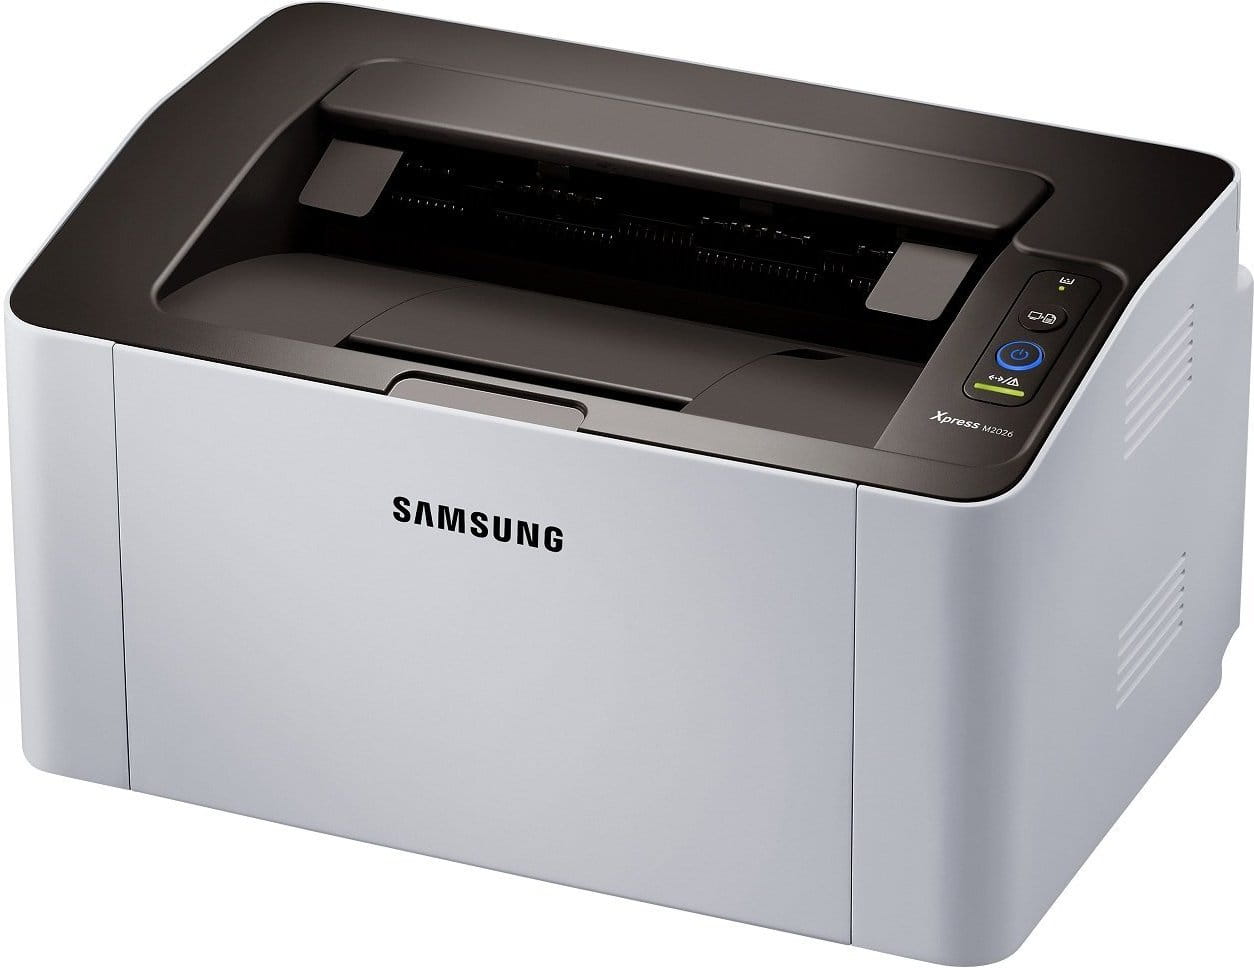 Printer Samsung SL-M2026 / A4 /